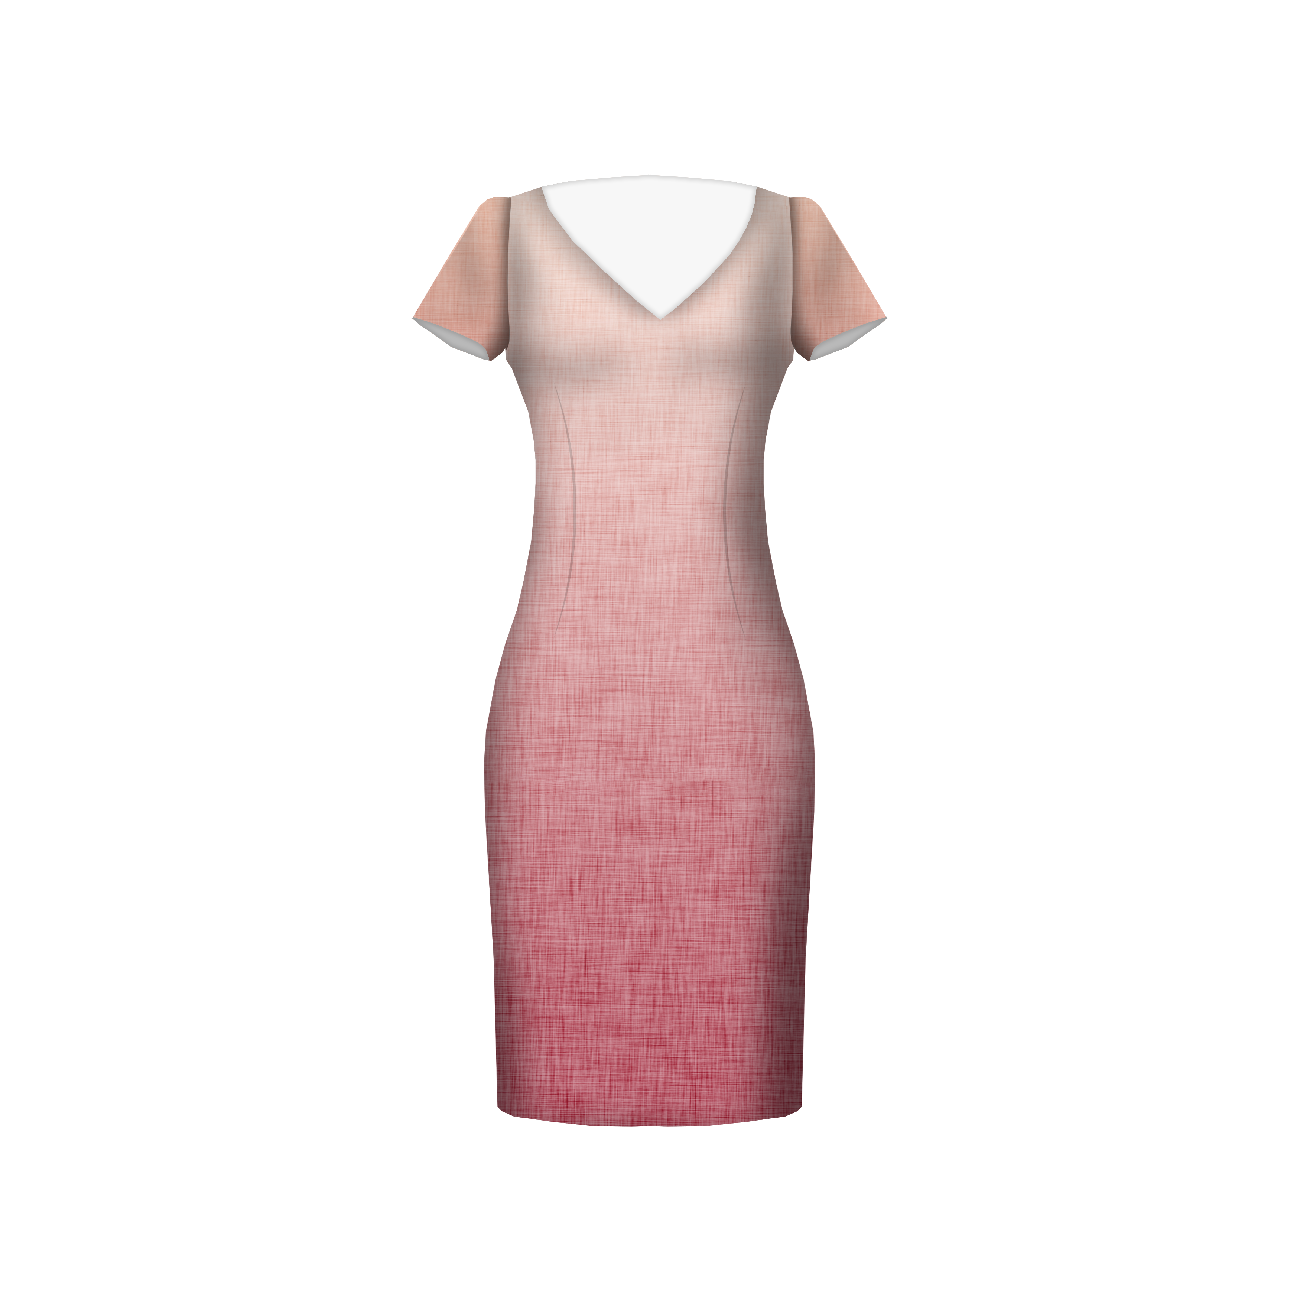 OMBRE / ACID WASH - fuksja (blady róż) - panel sukienkowy Len 100%